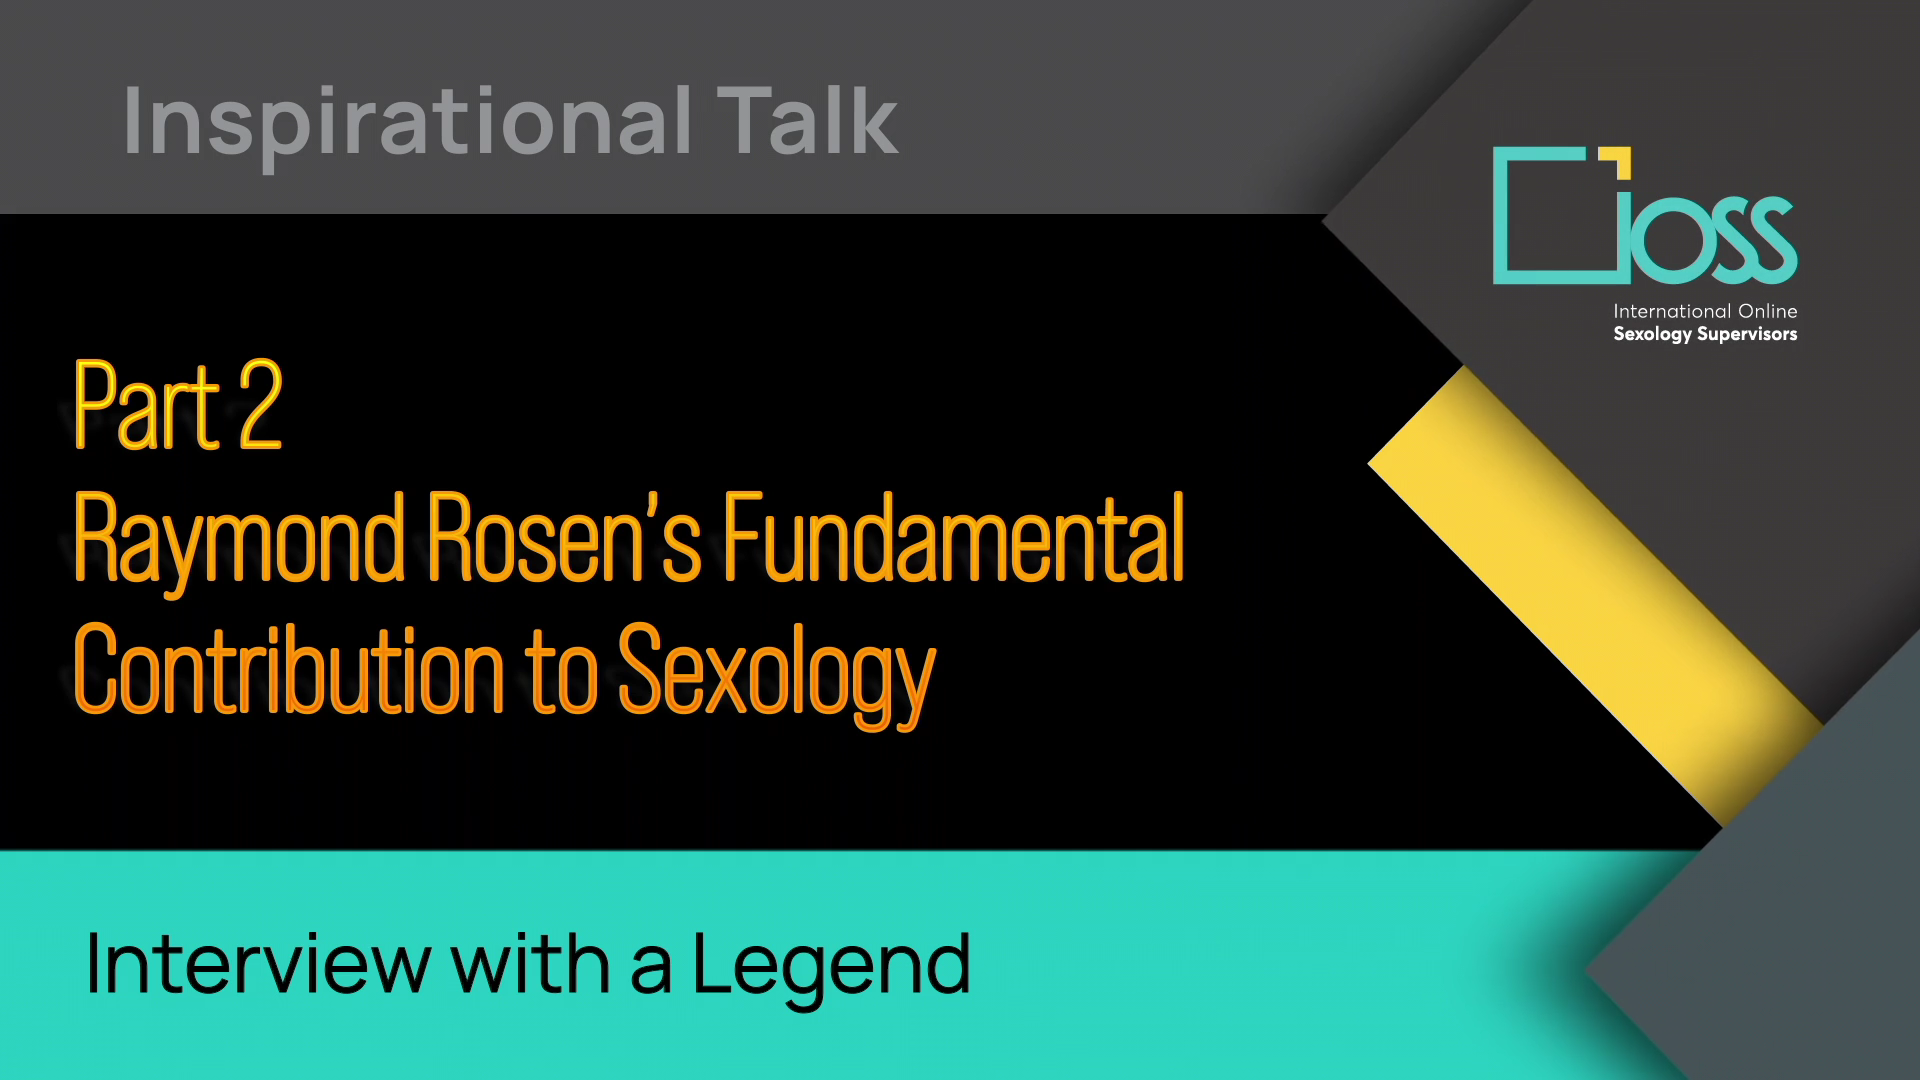 Part 2 Raymond Rosen’s Fundamental Contribution to Sexology (Part 1 & 2)